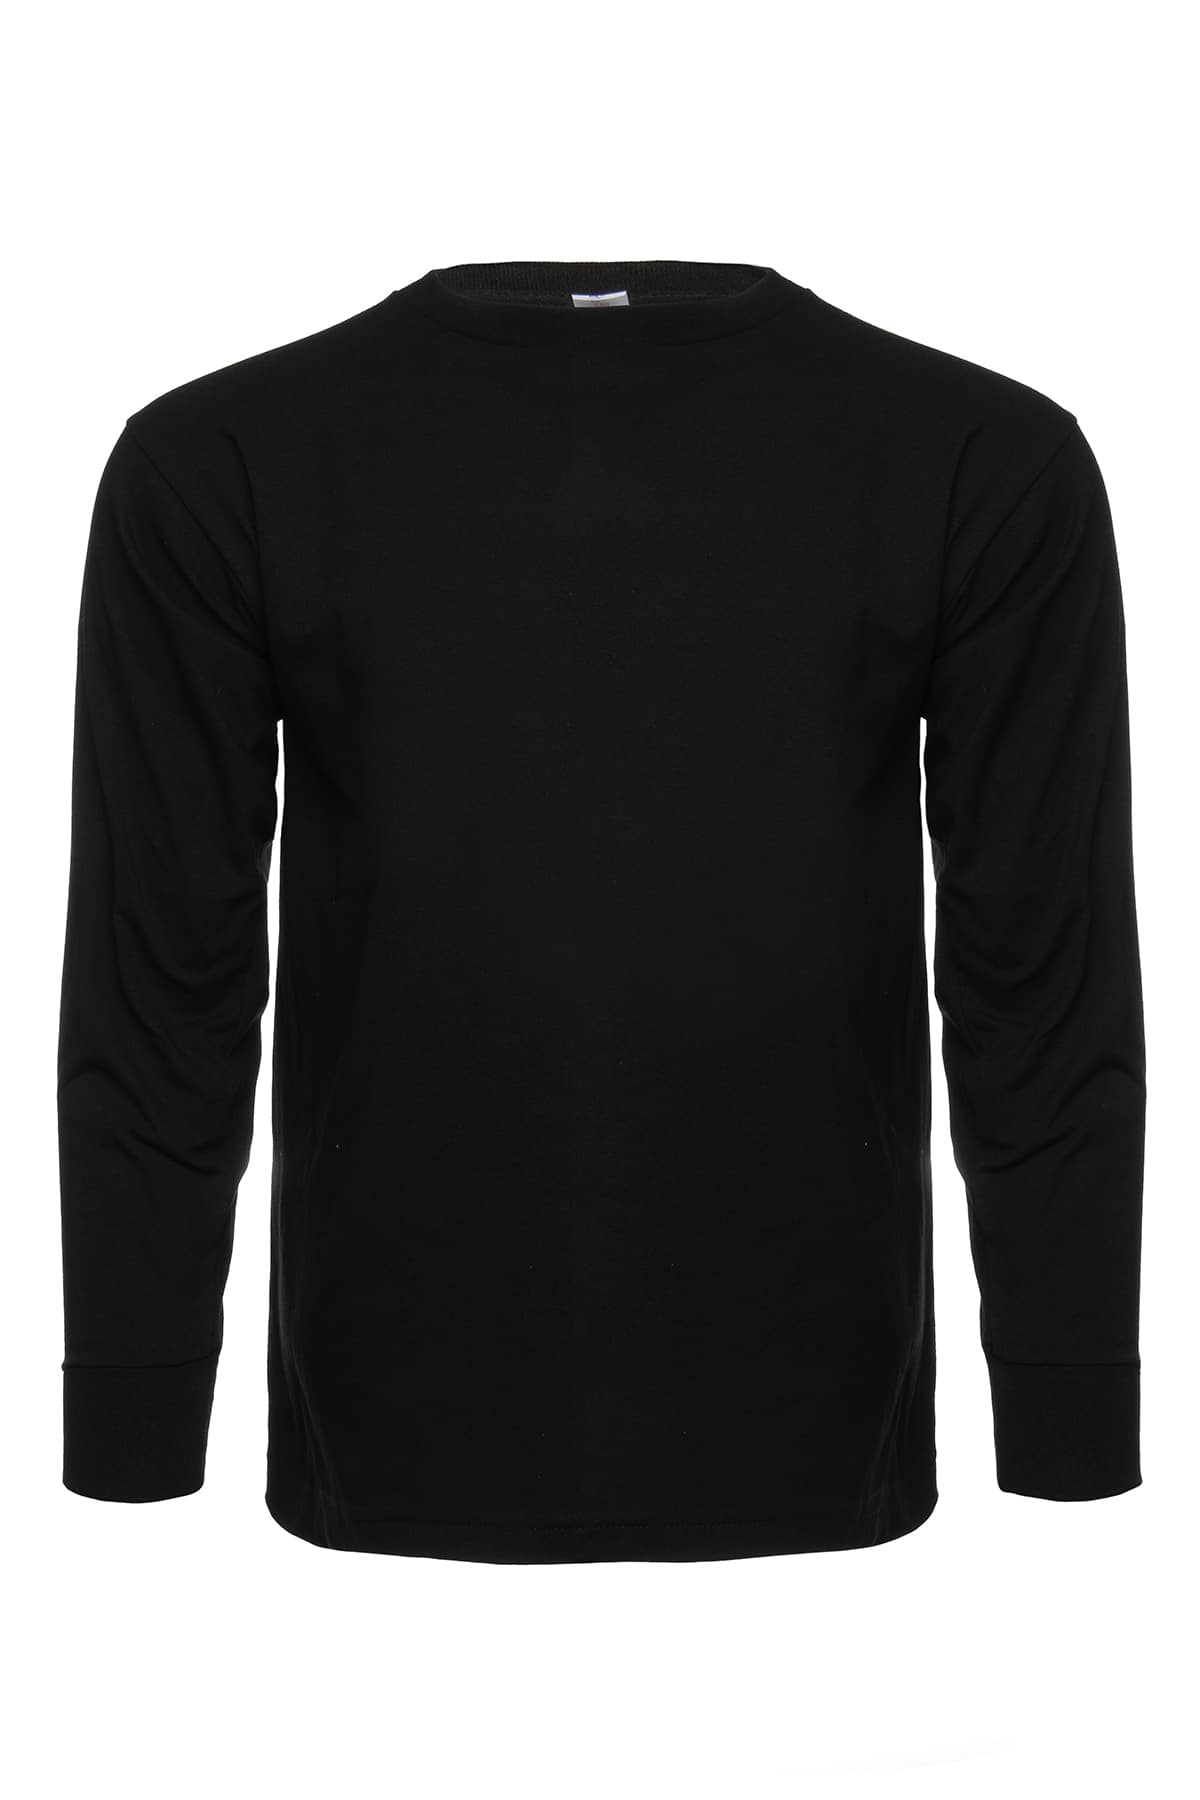 1304 Black Front Long Sleeve T-shirt